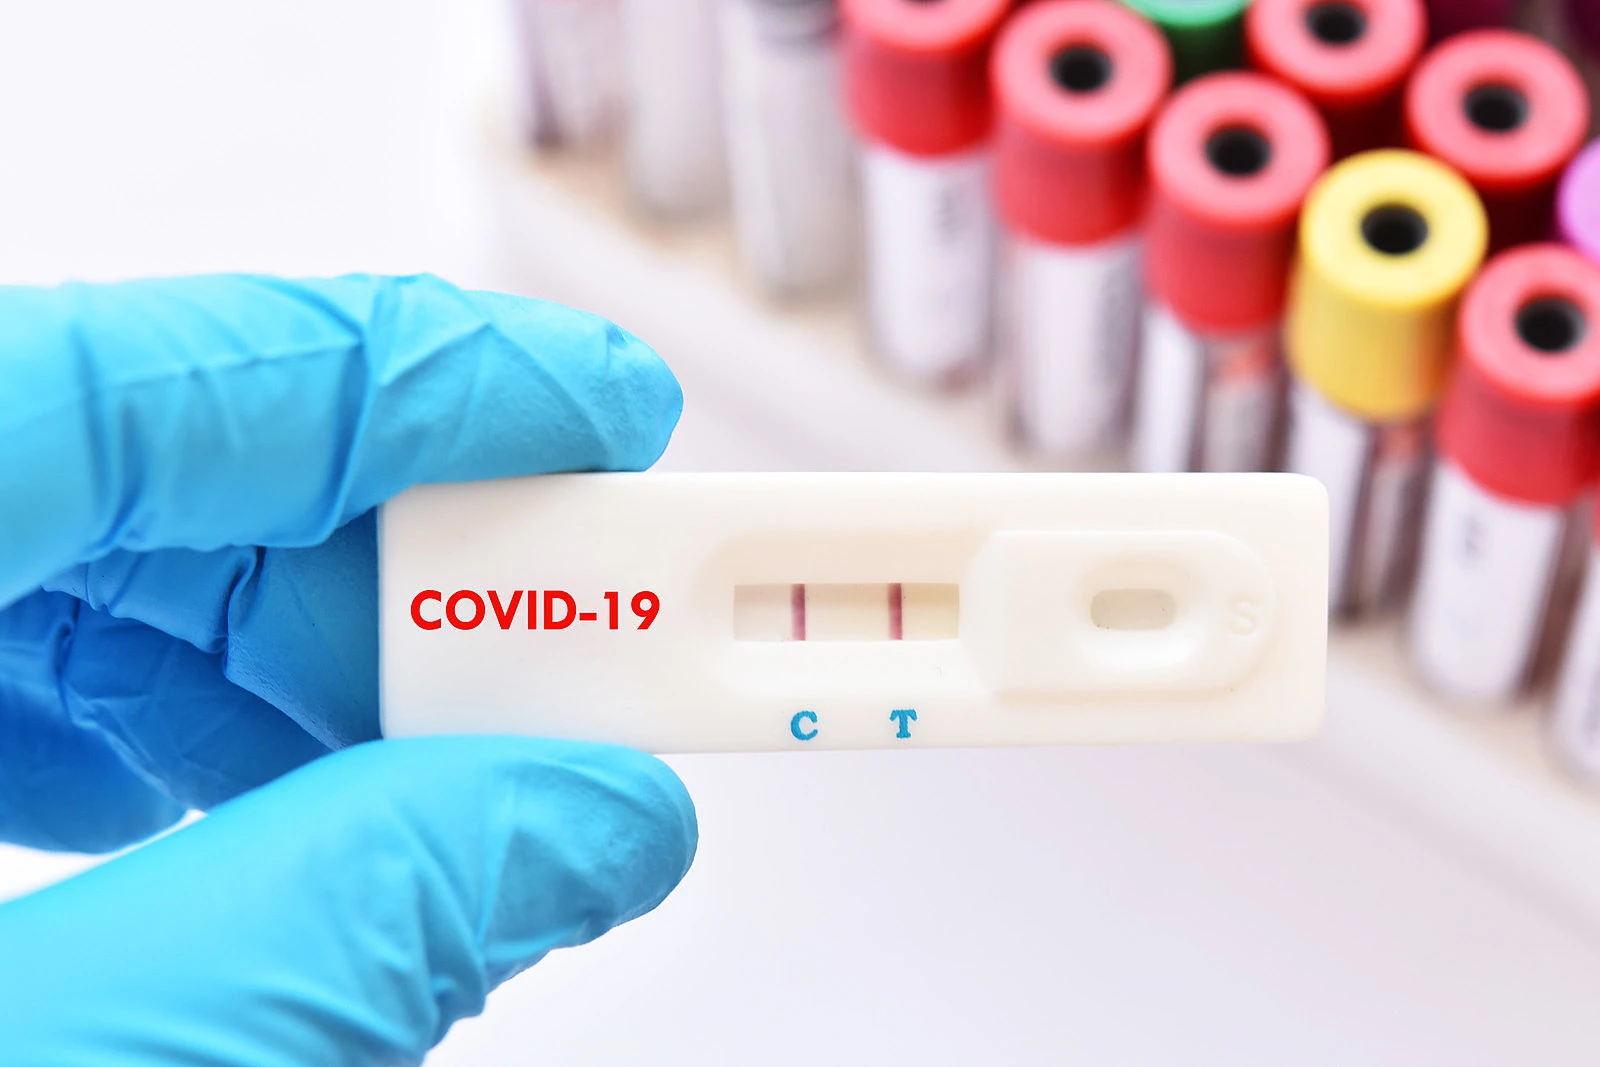 Former MLB star Jim Edmonds is tested for coronavirus after